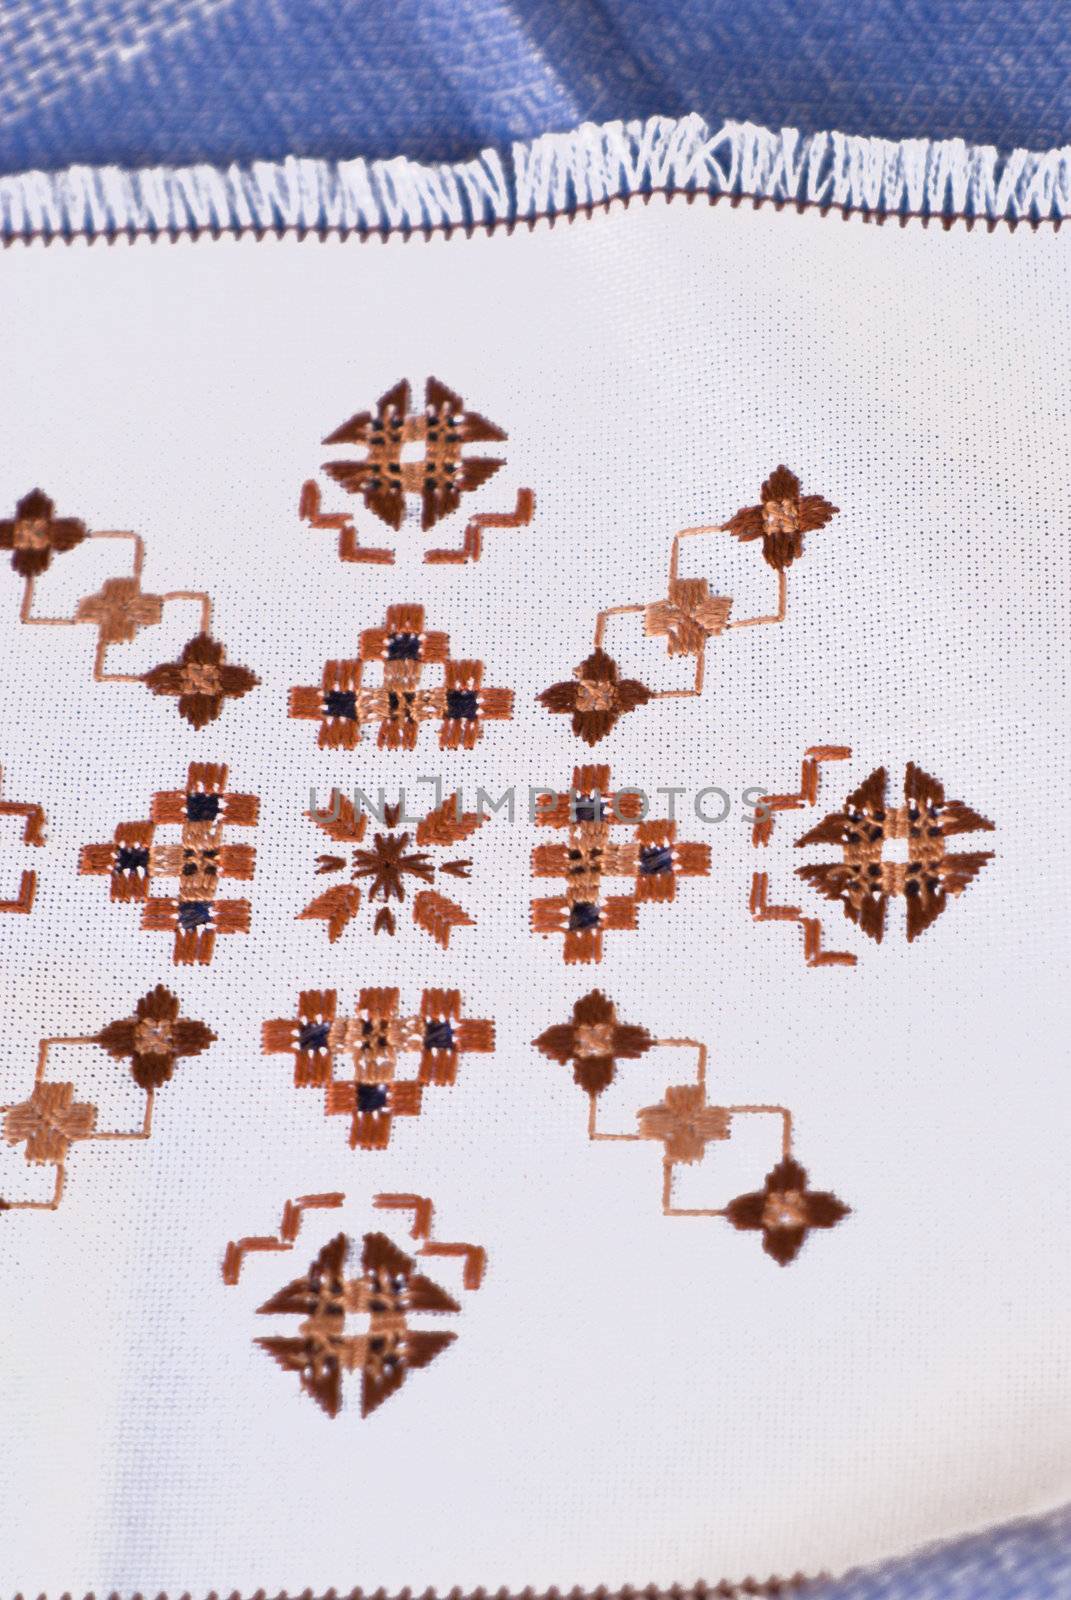 embroidered table covers, handmade by gandolfocannatella